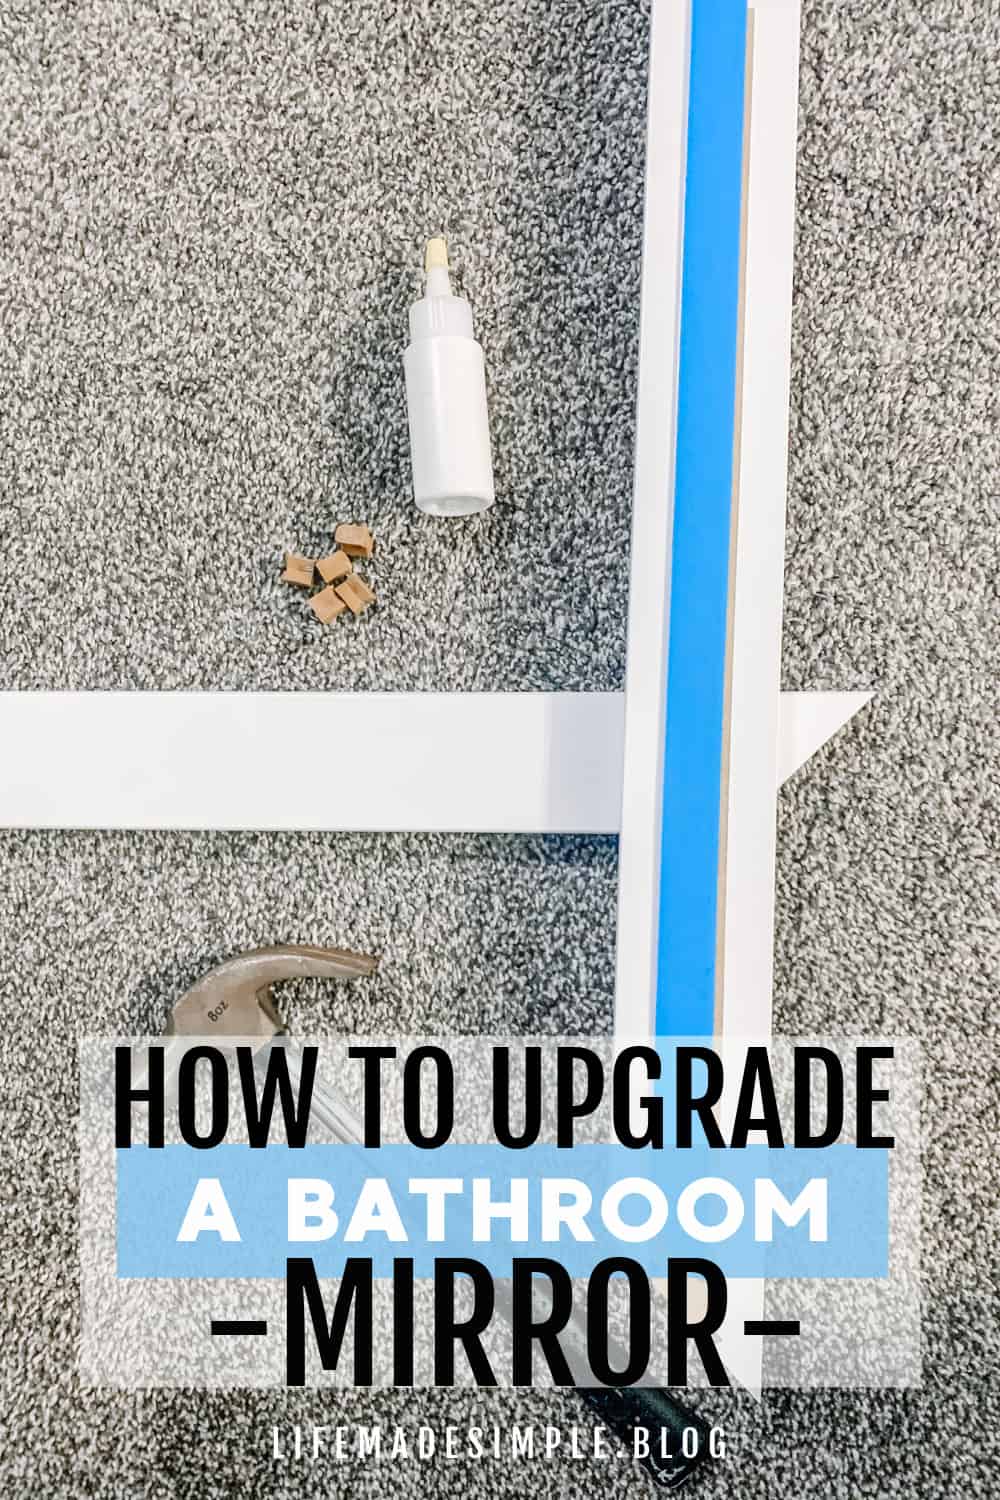 How to upgrade a bathroom mirror